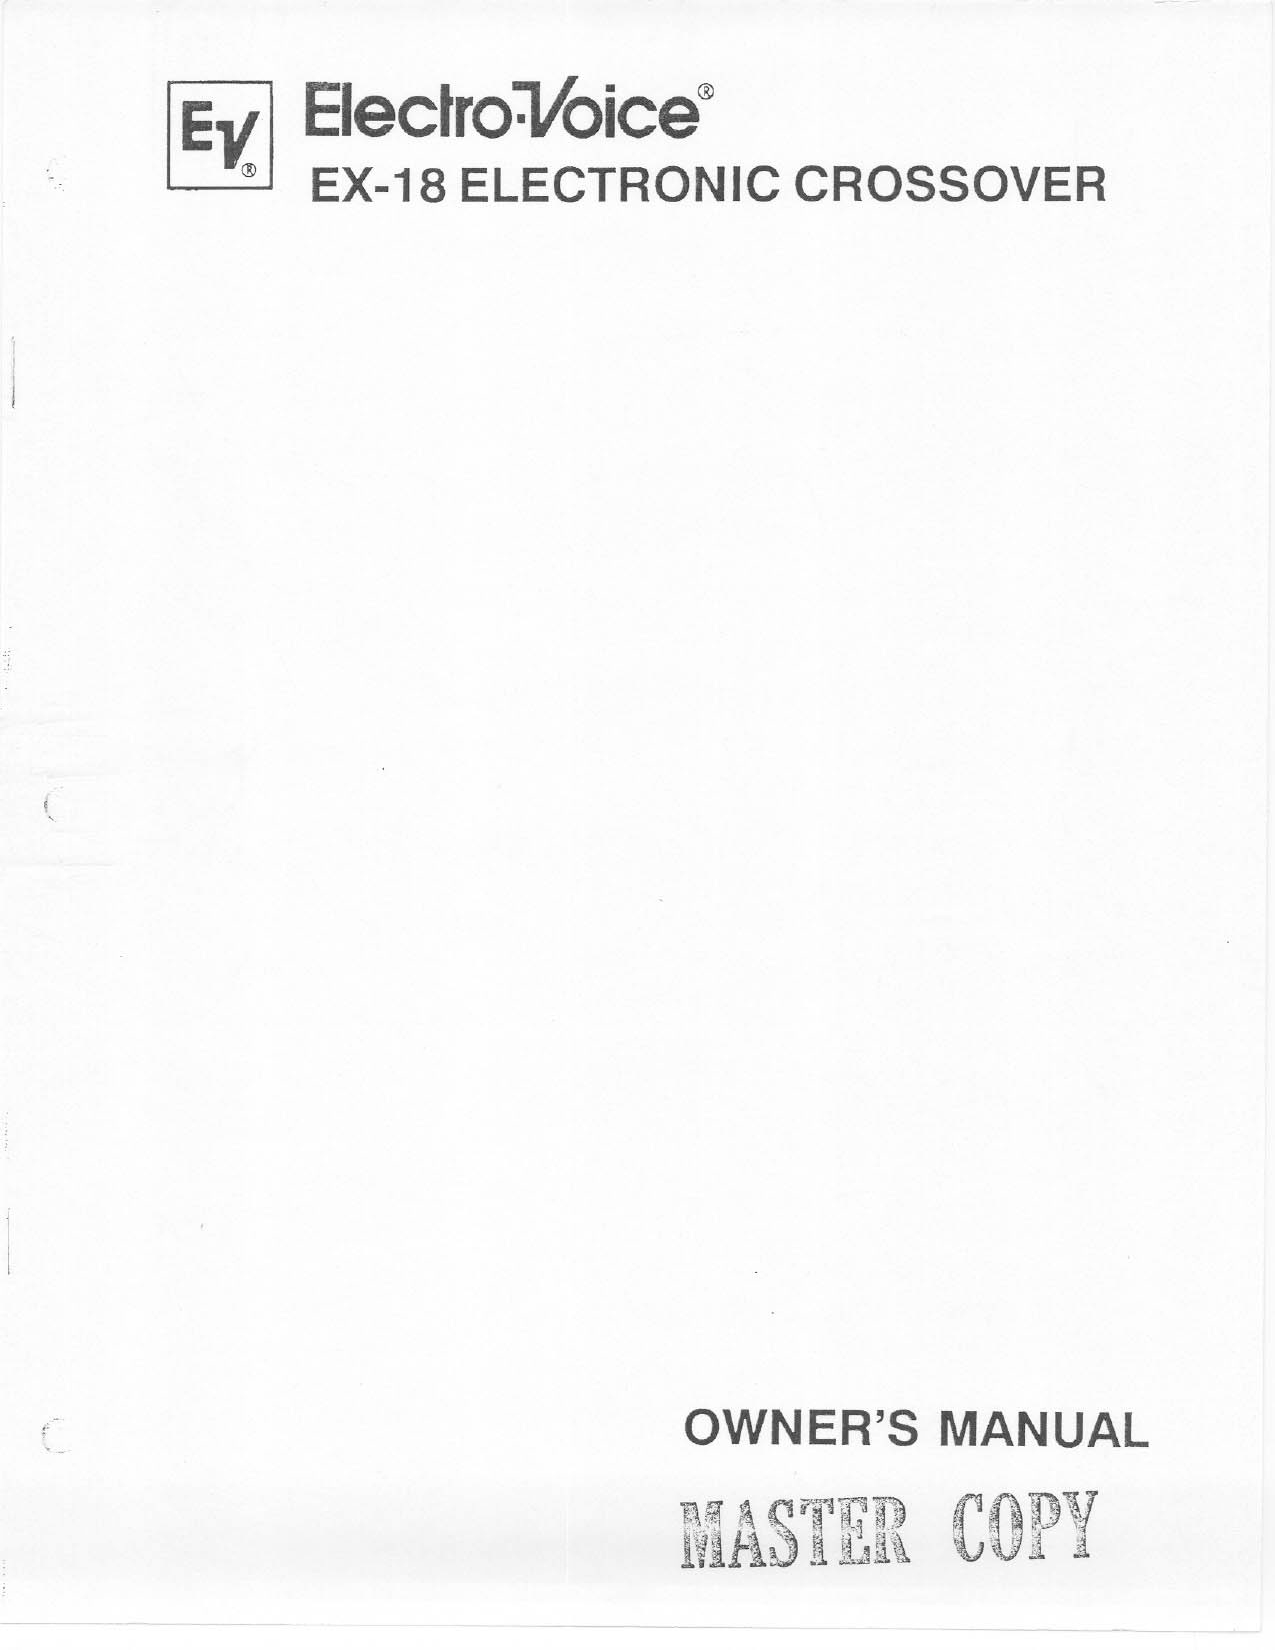 Electro-voice EX-18 User Manual